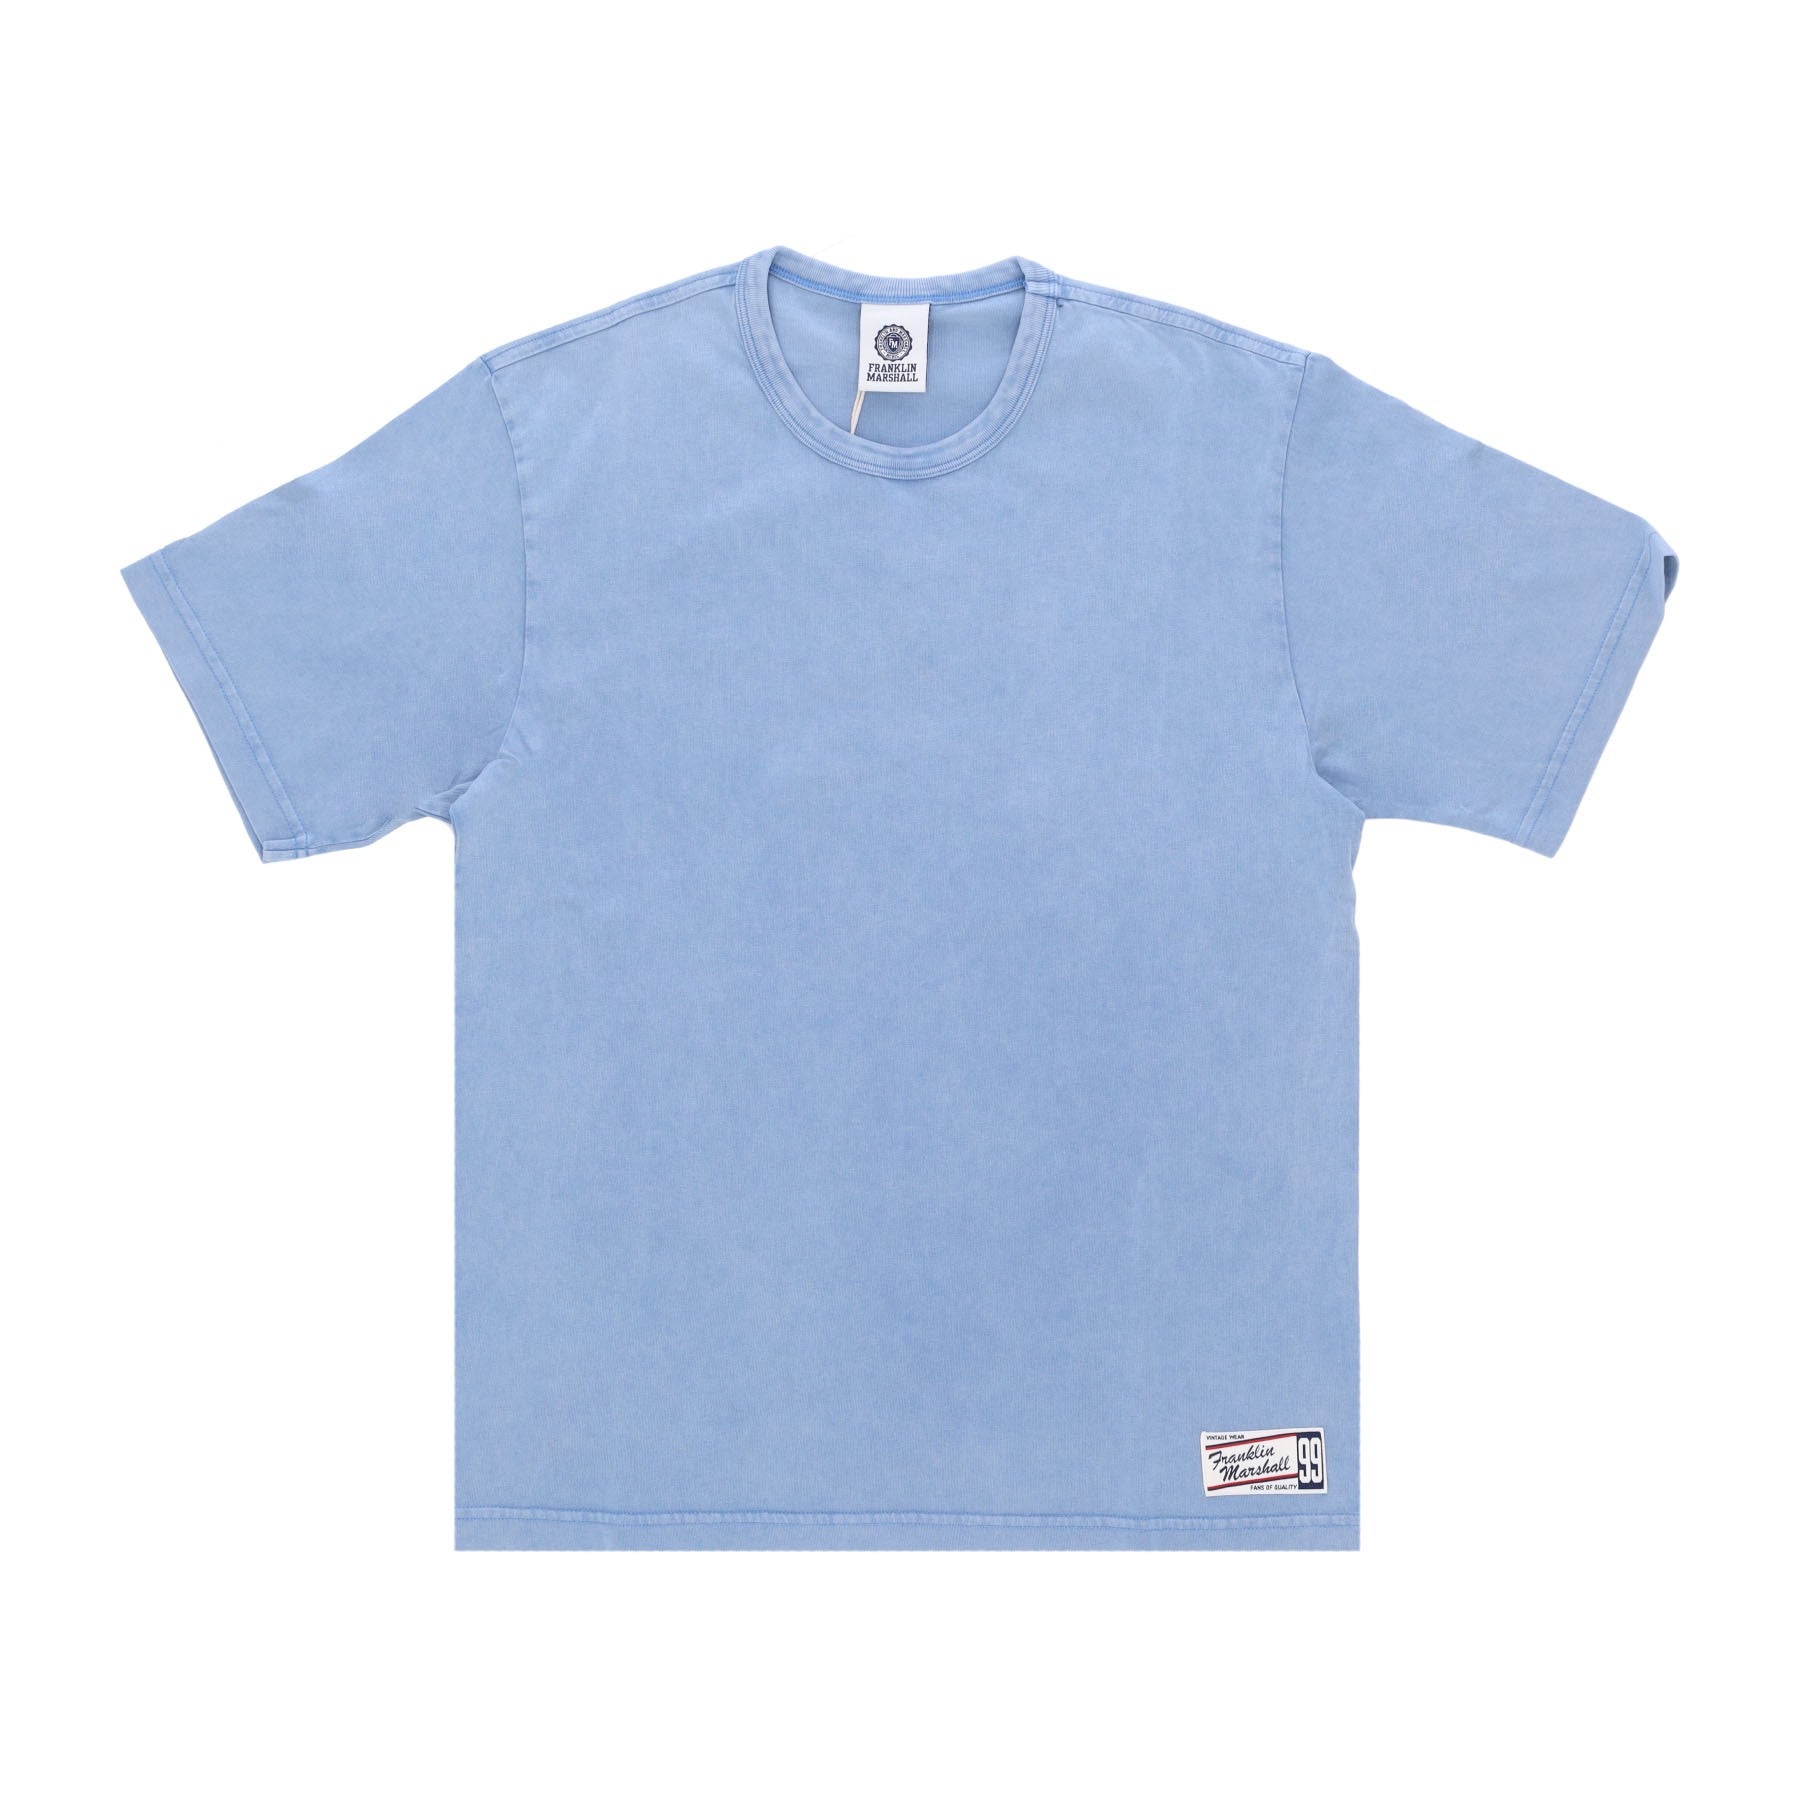 Acid Wash 20/1 Tee Light Blue Men's T-Shirt